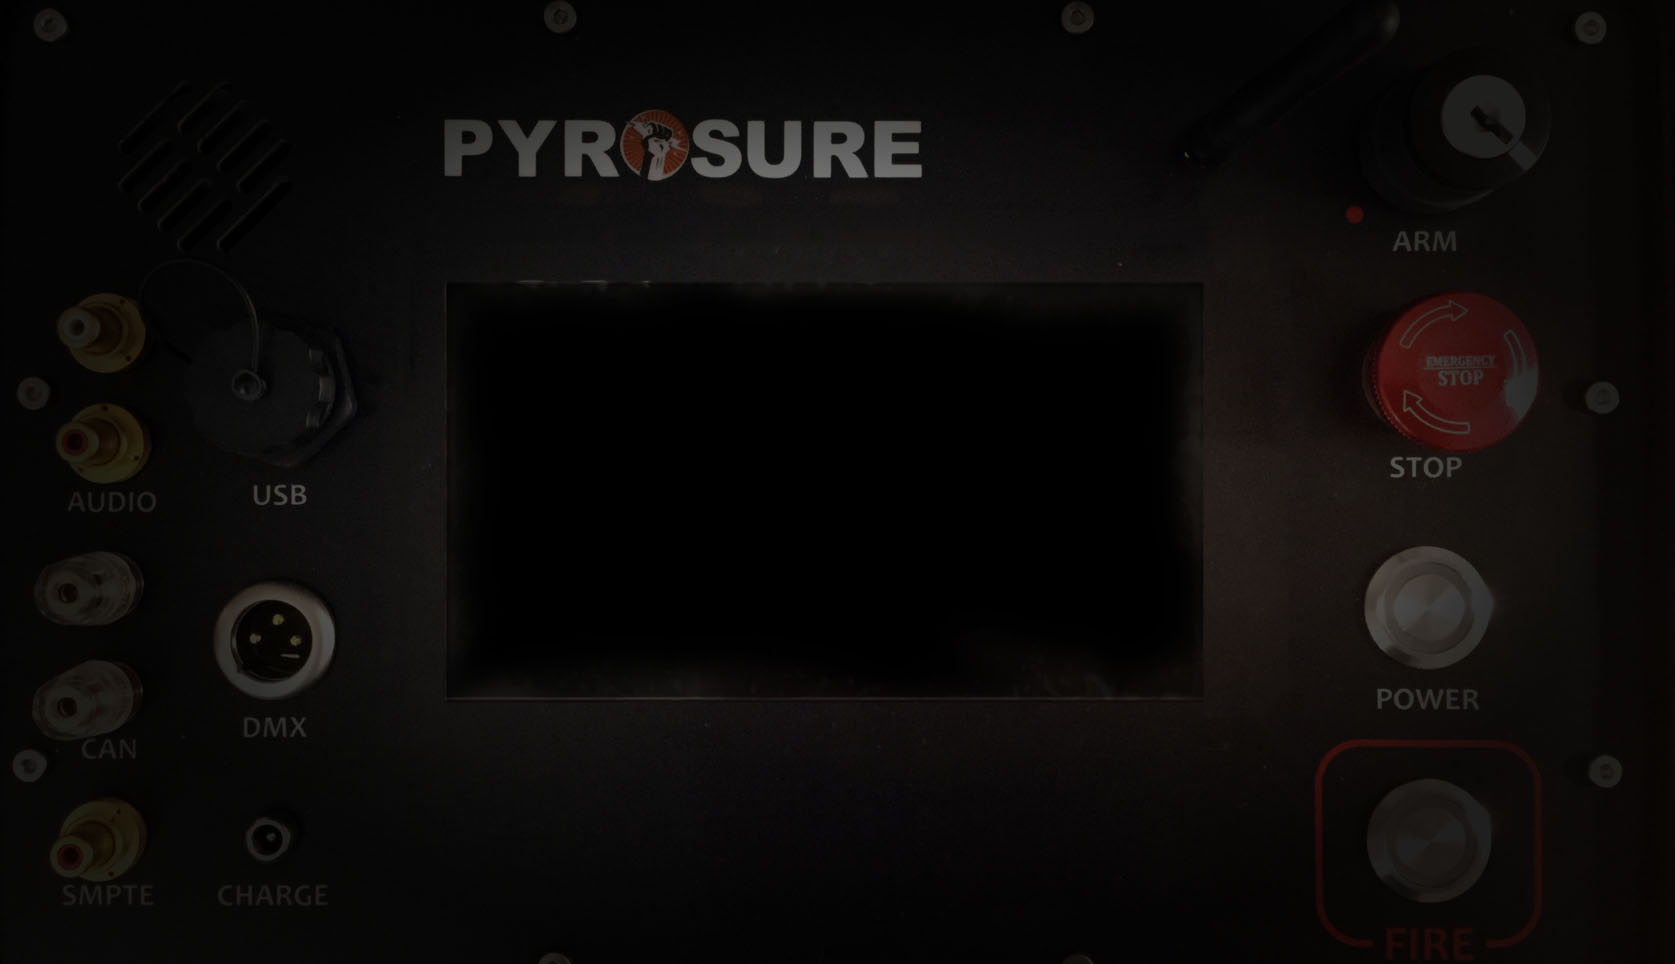 PyroSure